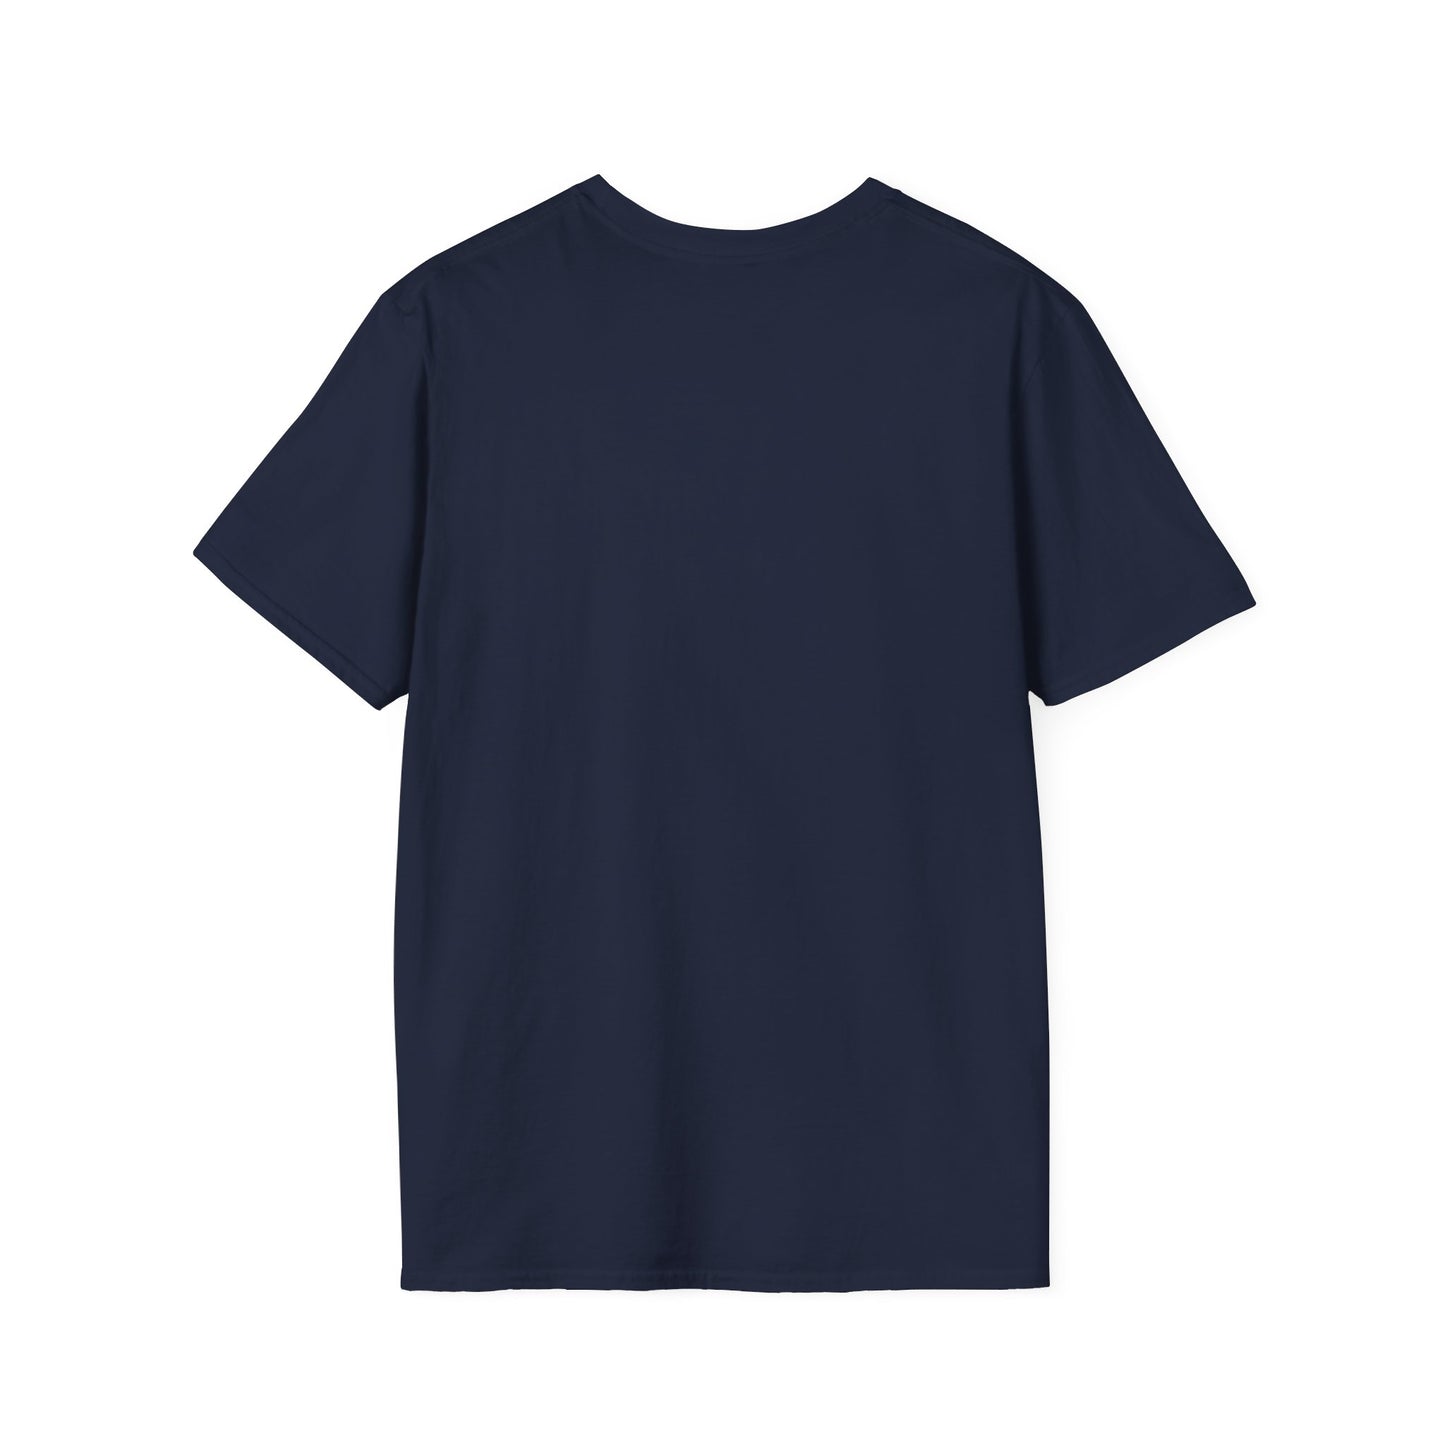 Unisex Softstyle T-Shirt revolution